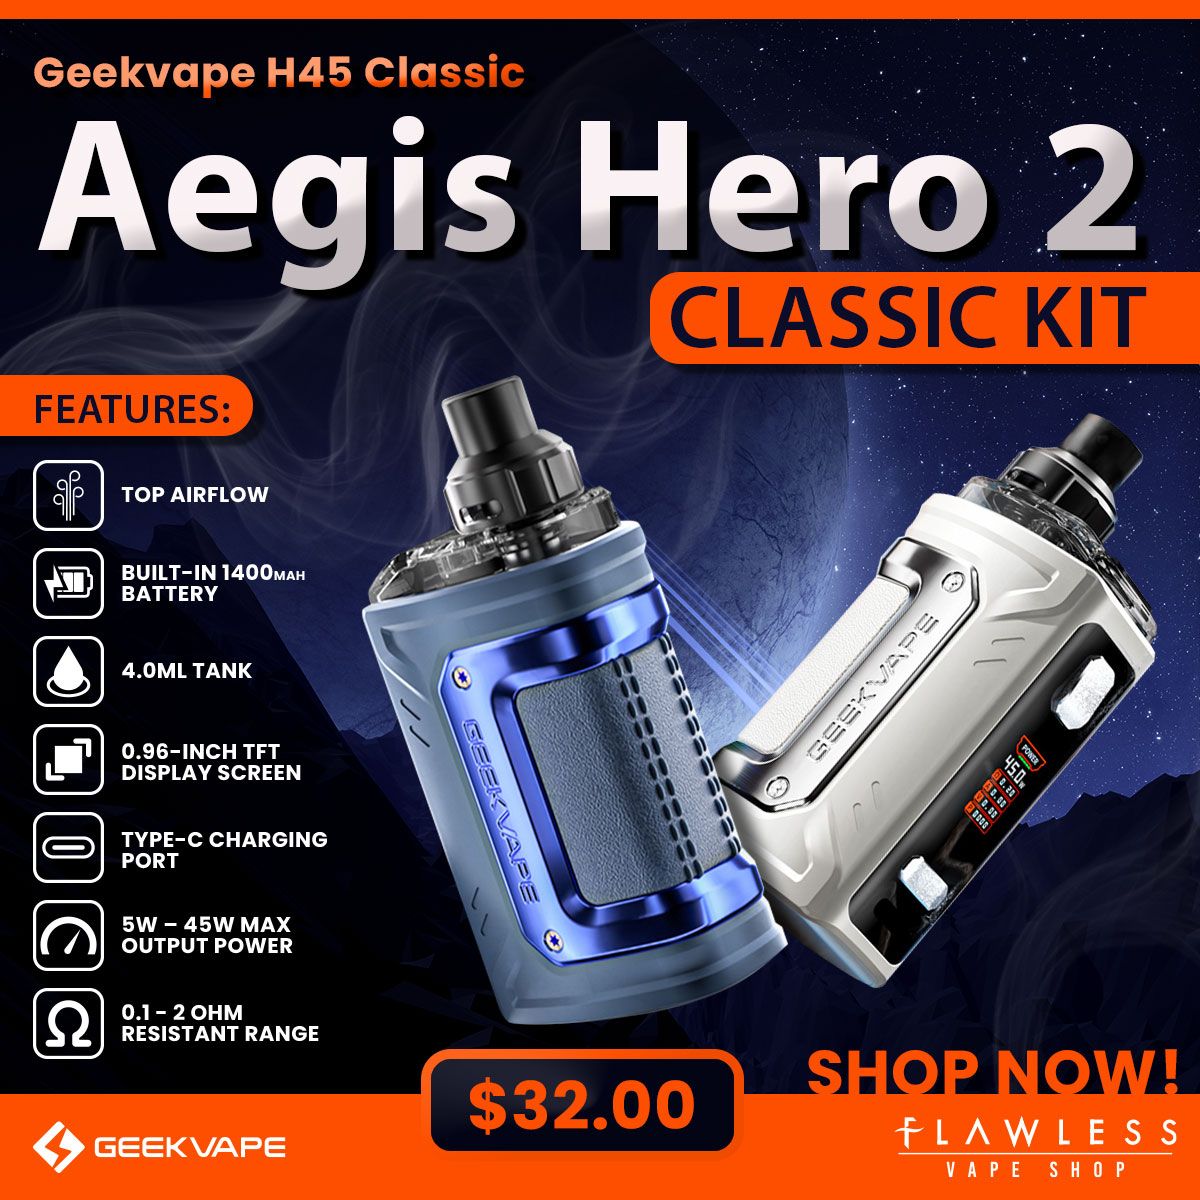 Geekvape H45 Classic (Aegis Hero 2 Classic kit)